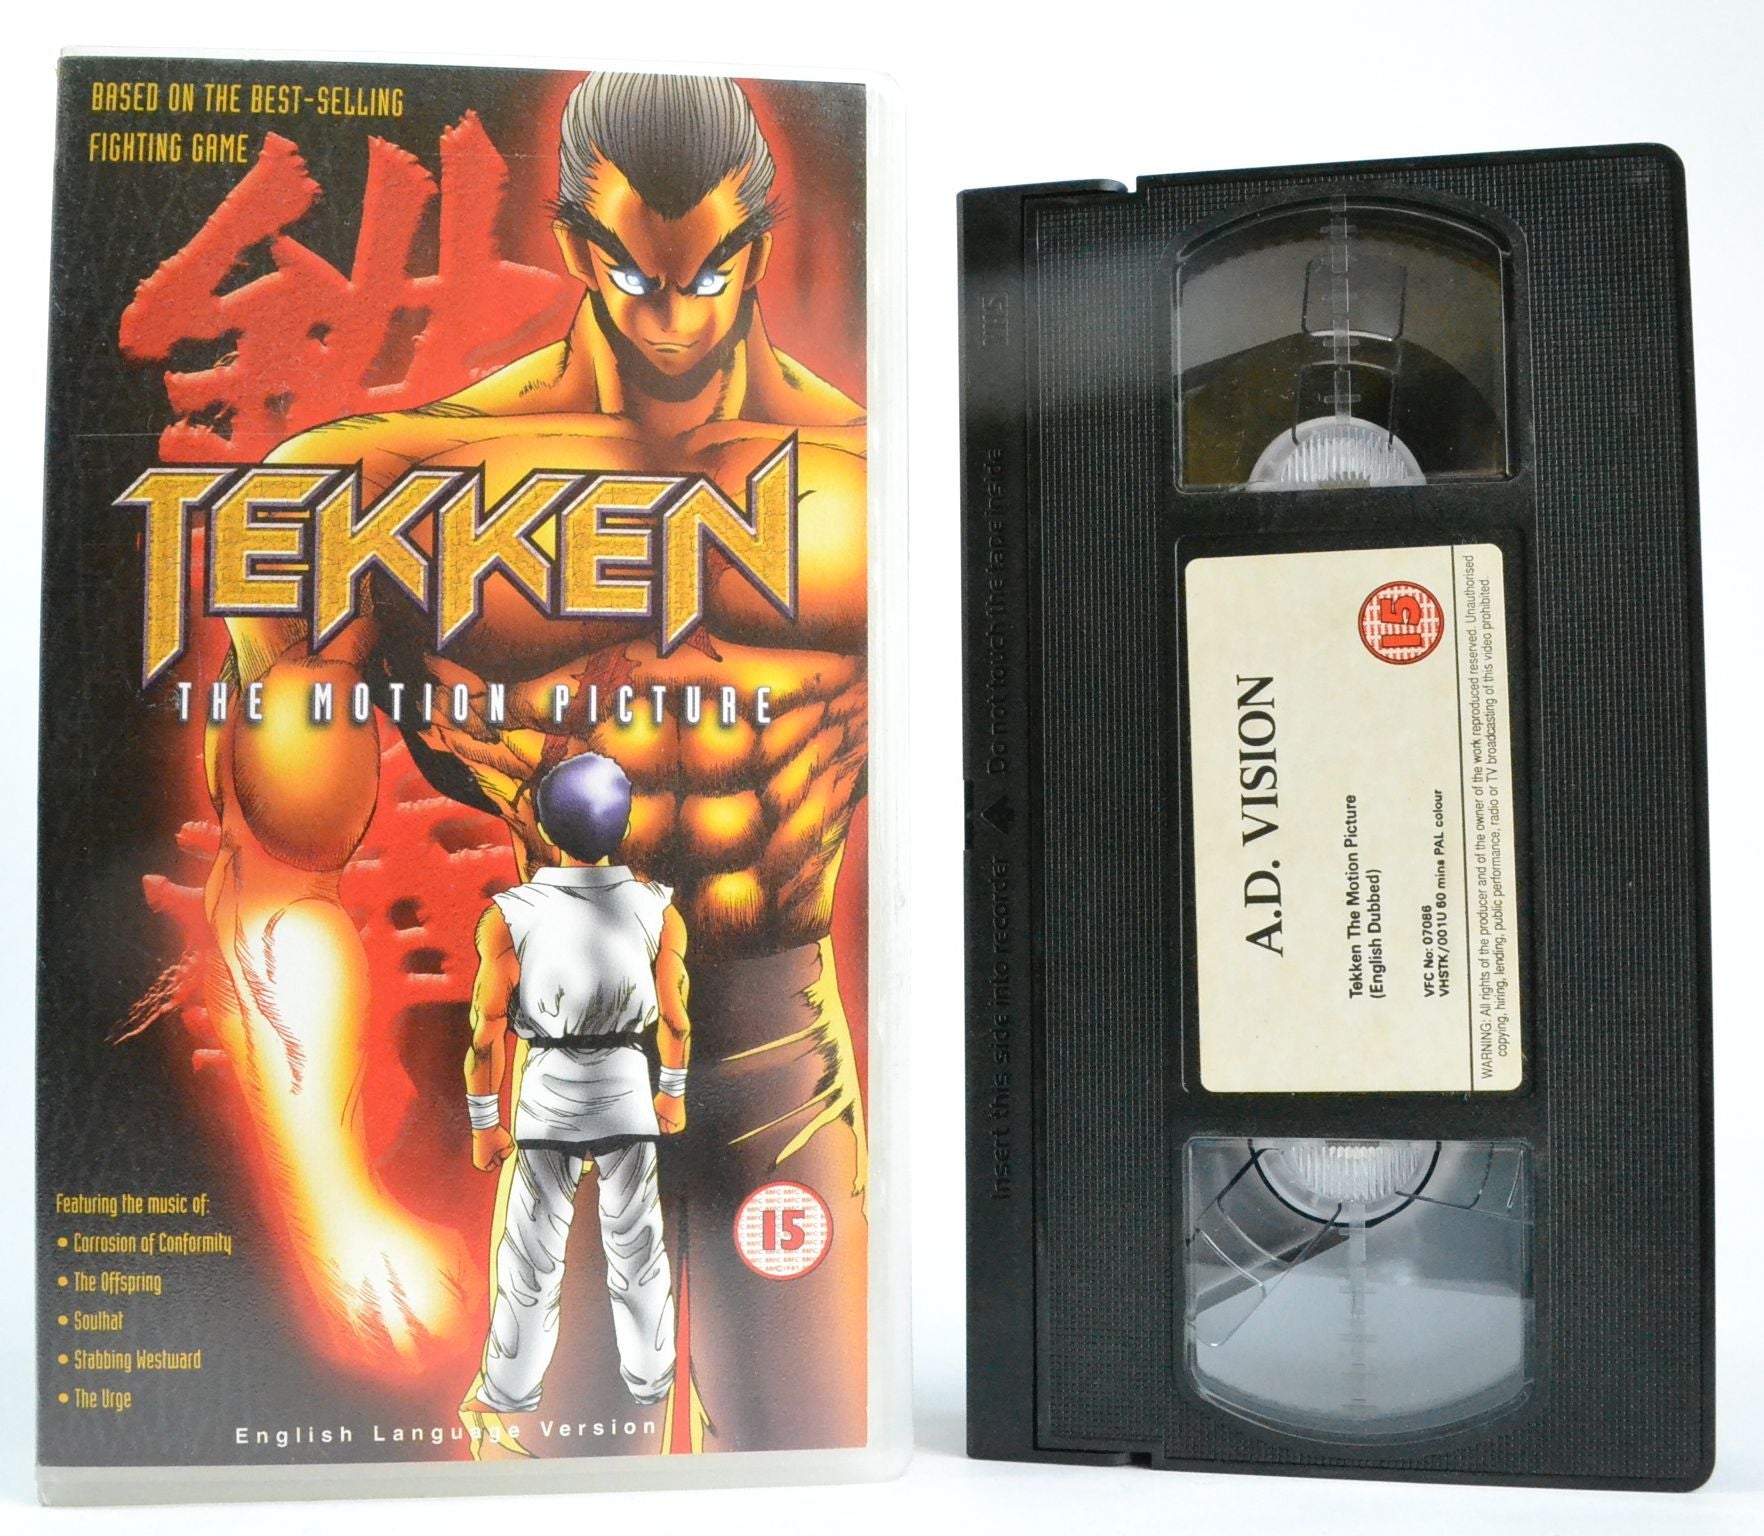 Tekken: The Motion Picture [Eng Lang Version] Namco Fighting Game - ADV - VHS-